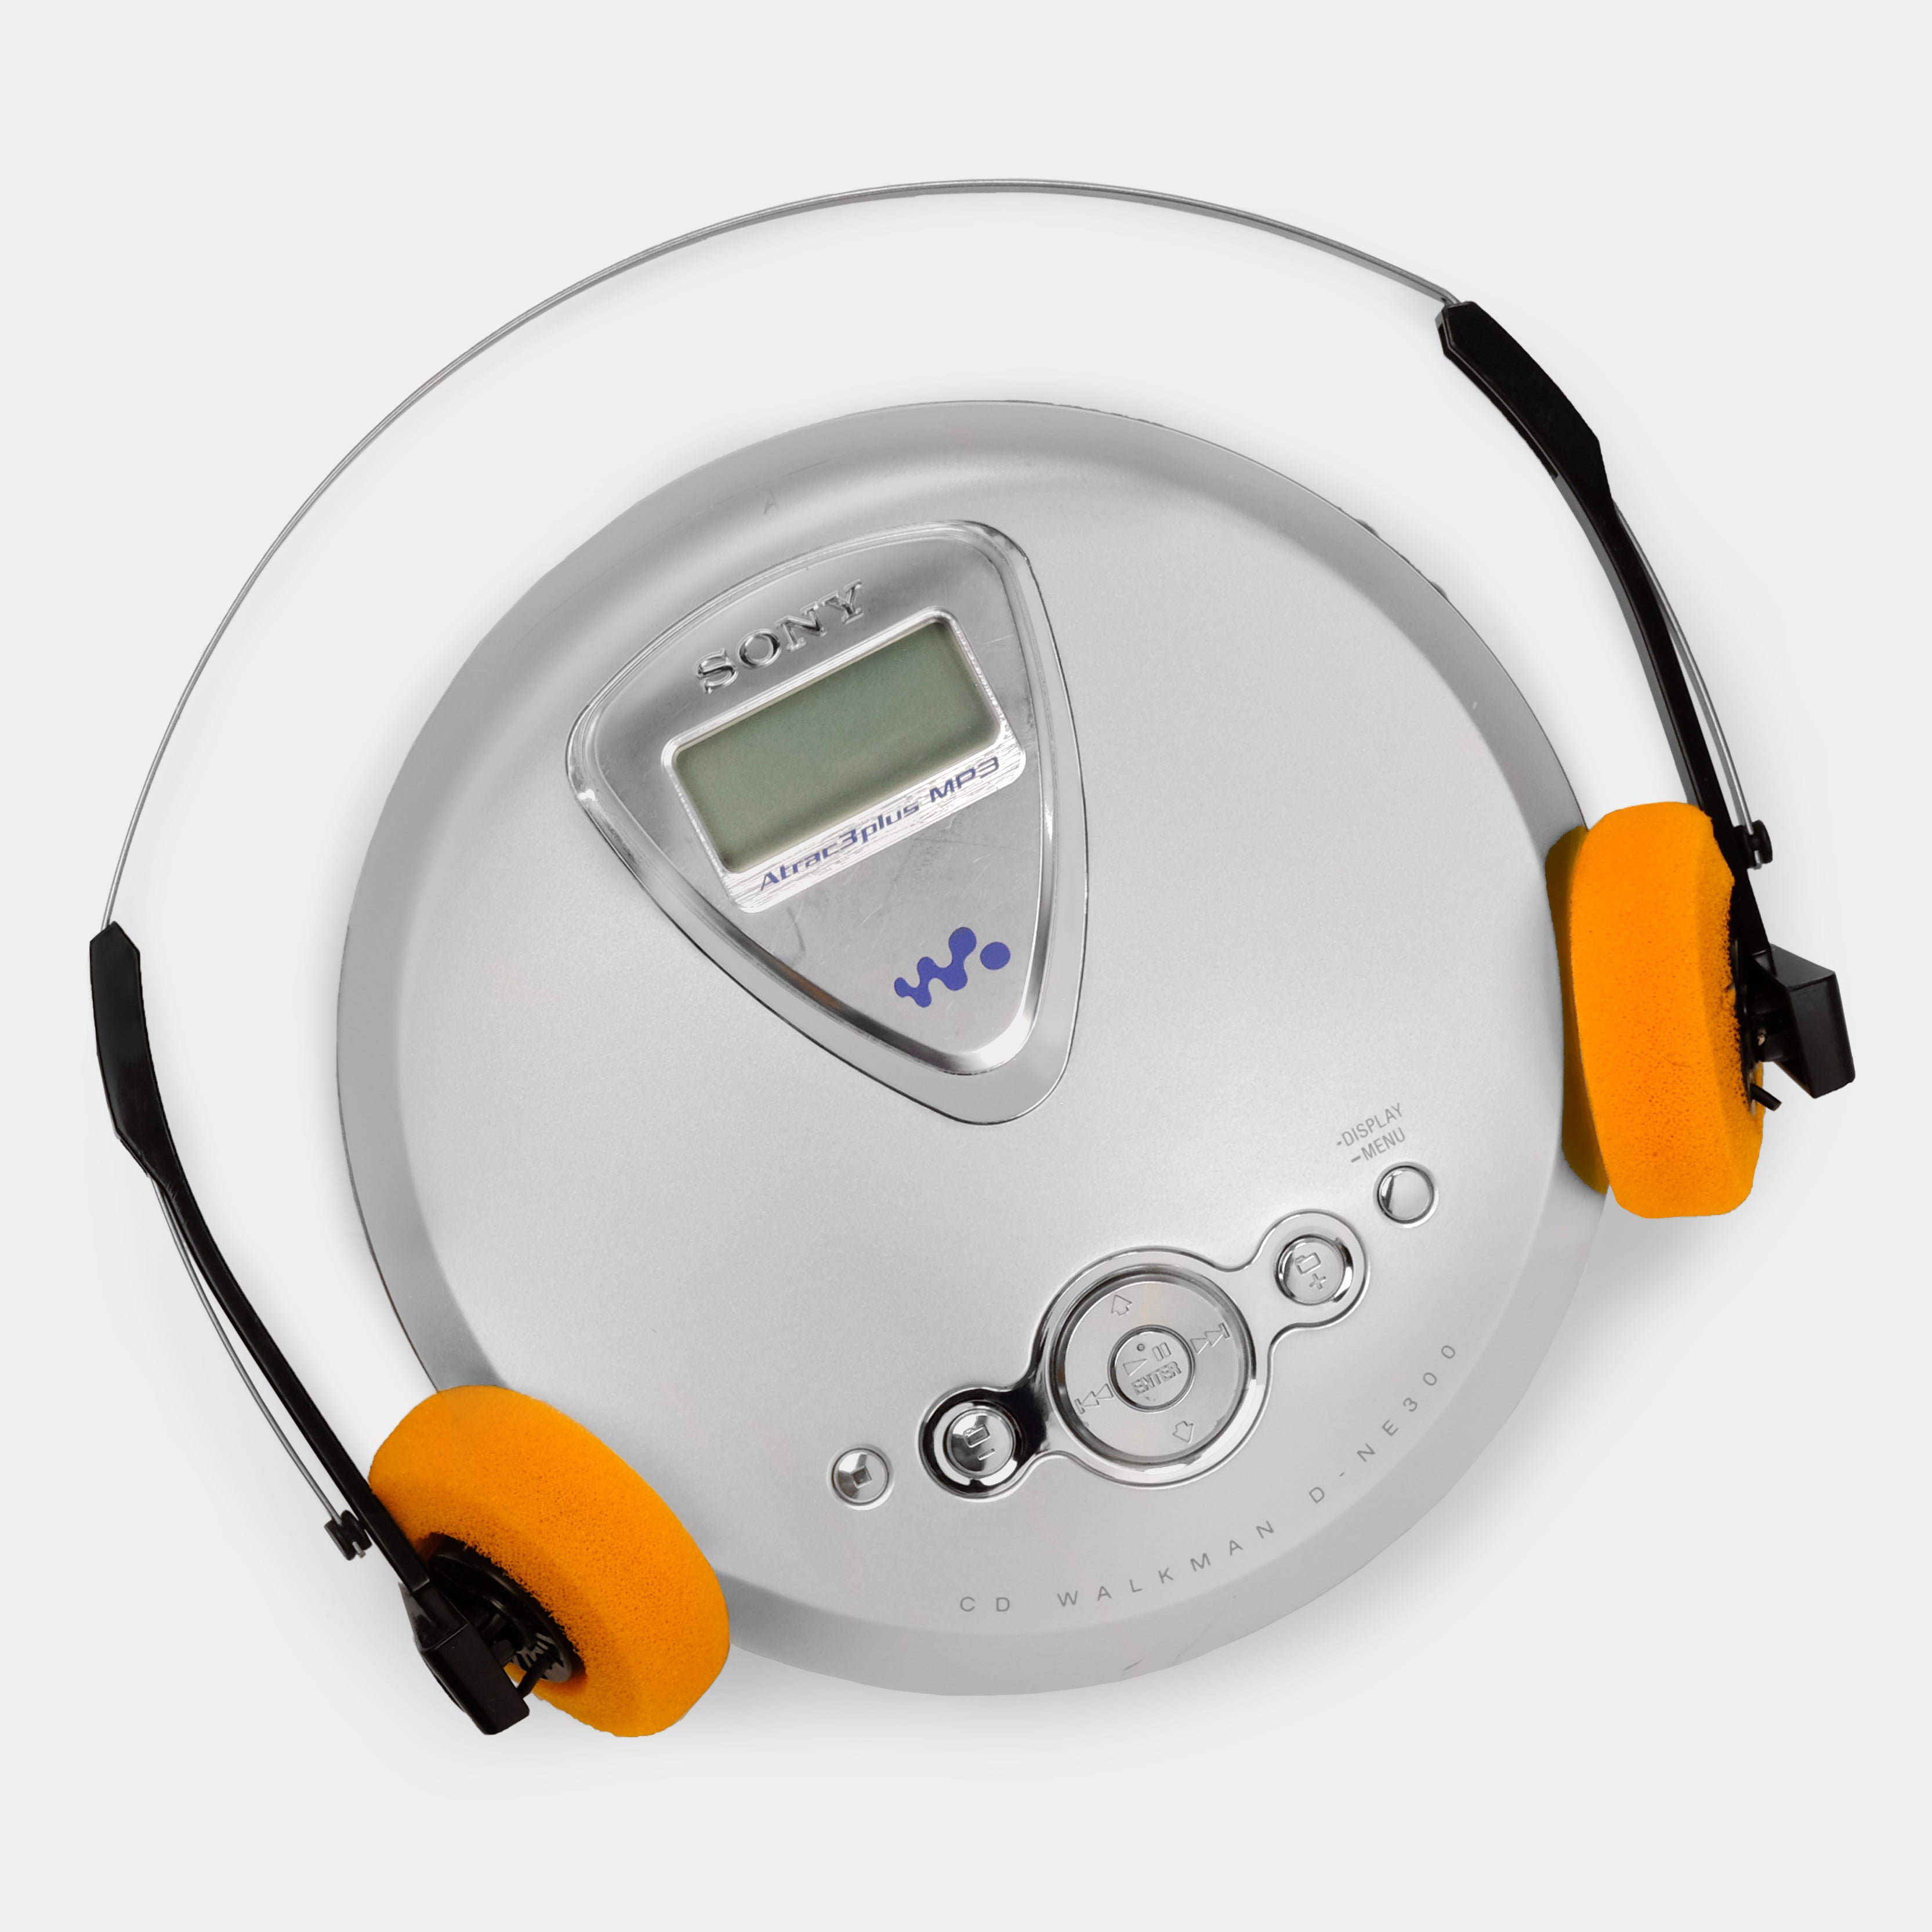 Sony Walkman D-NE300 Portable CD Player